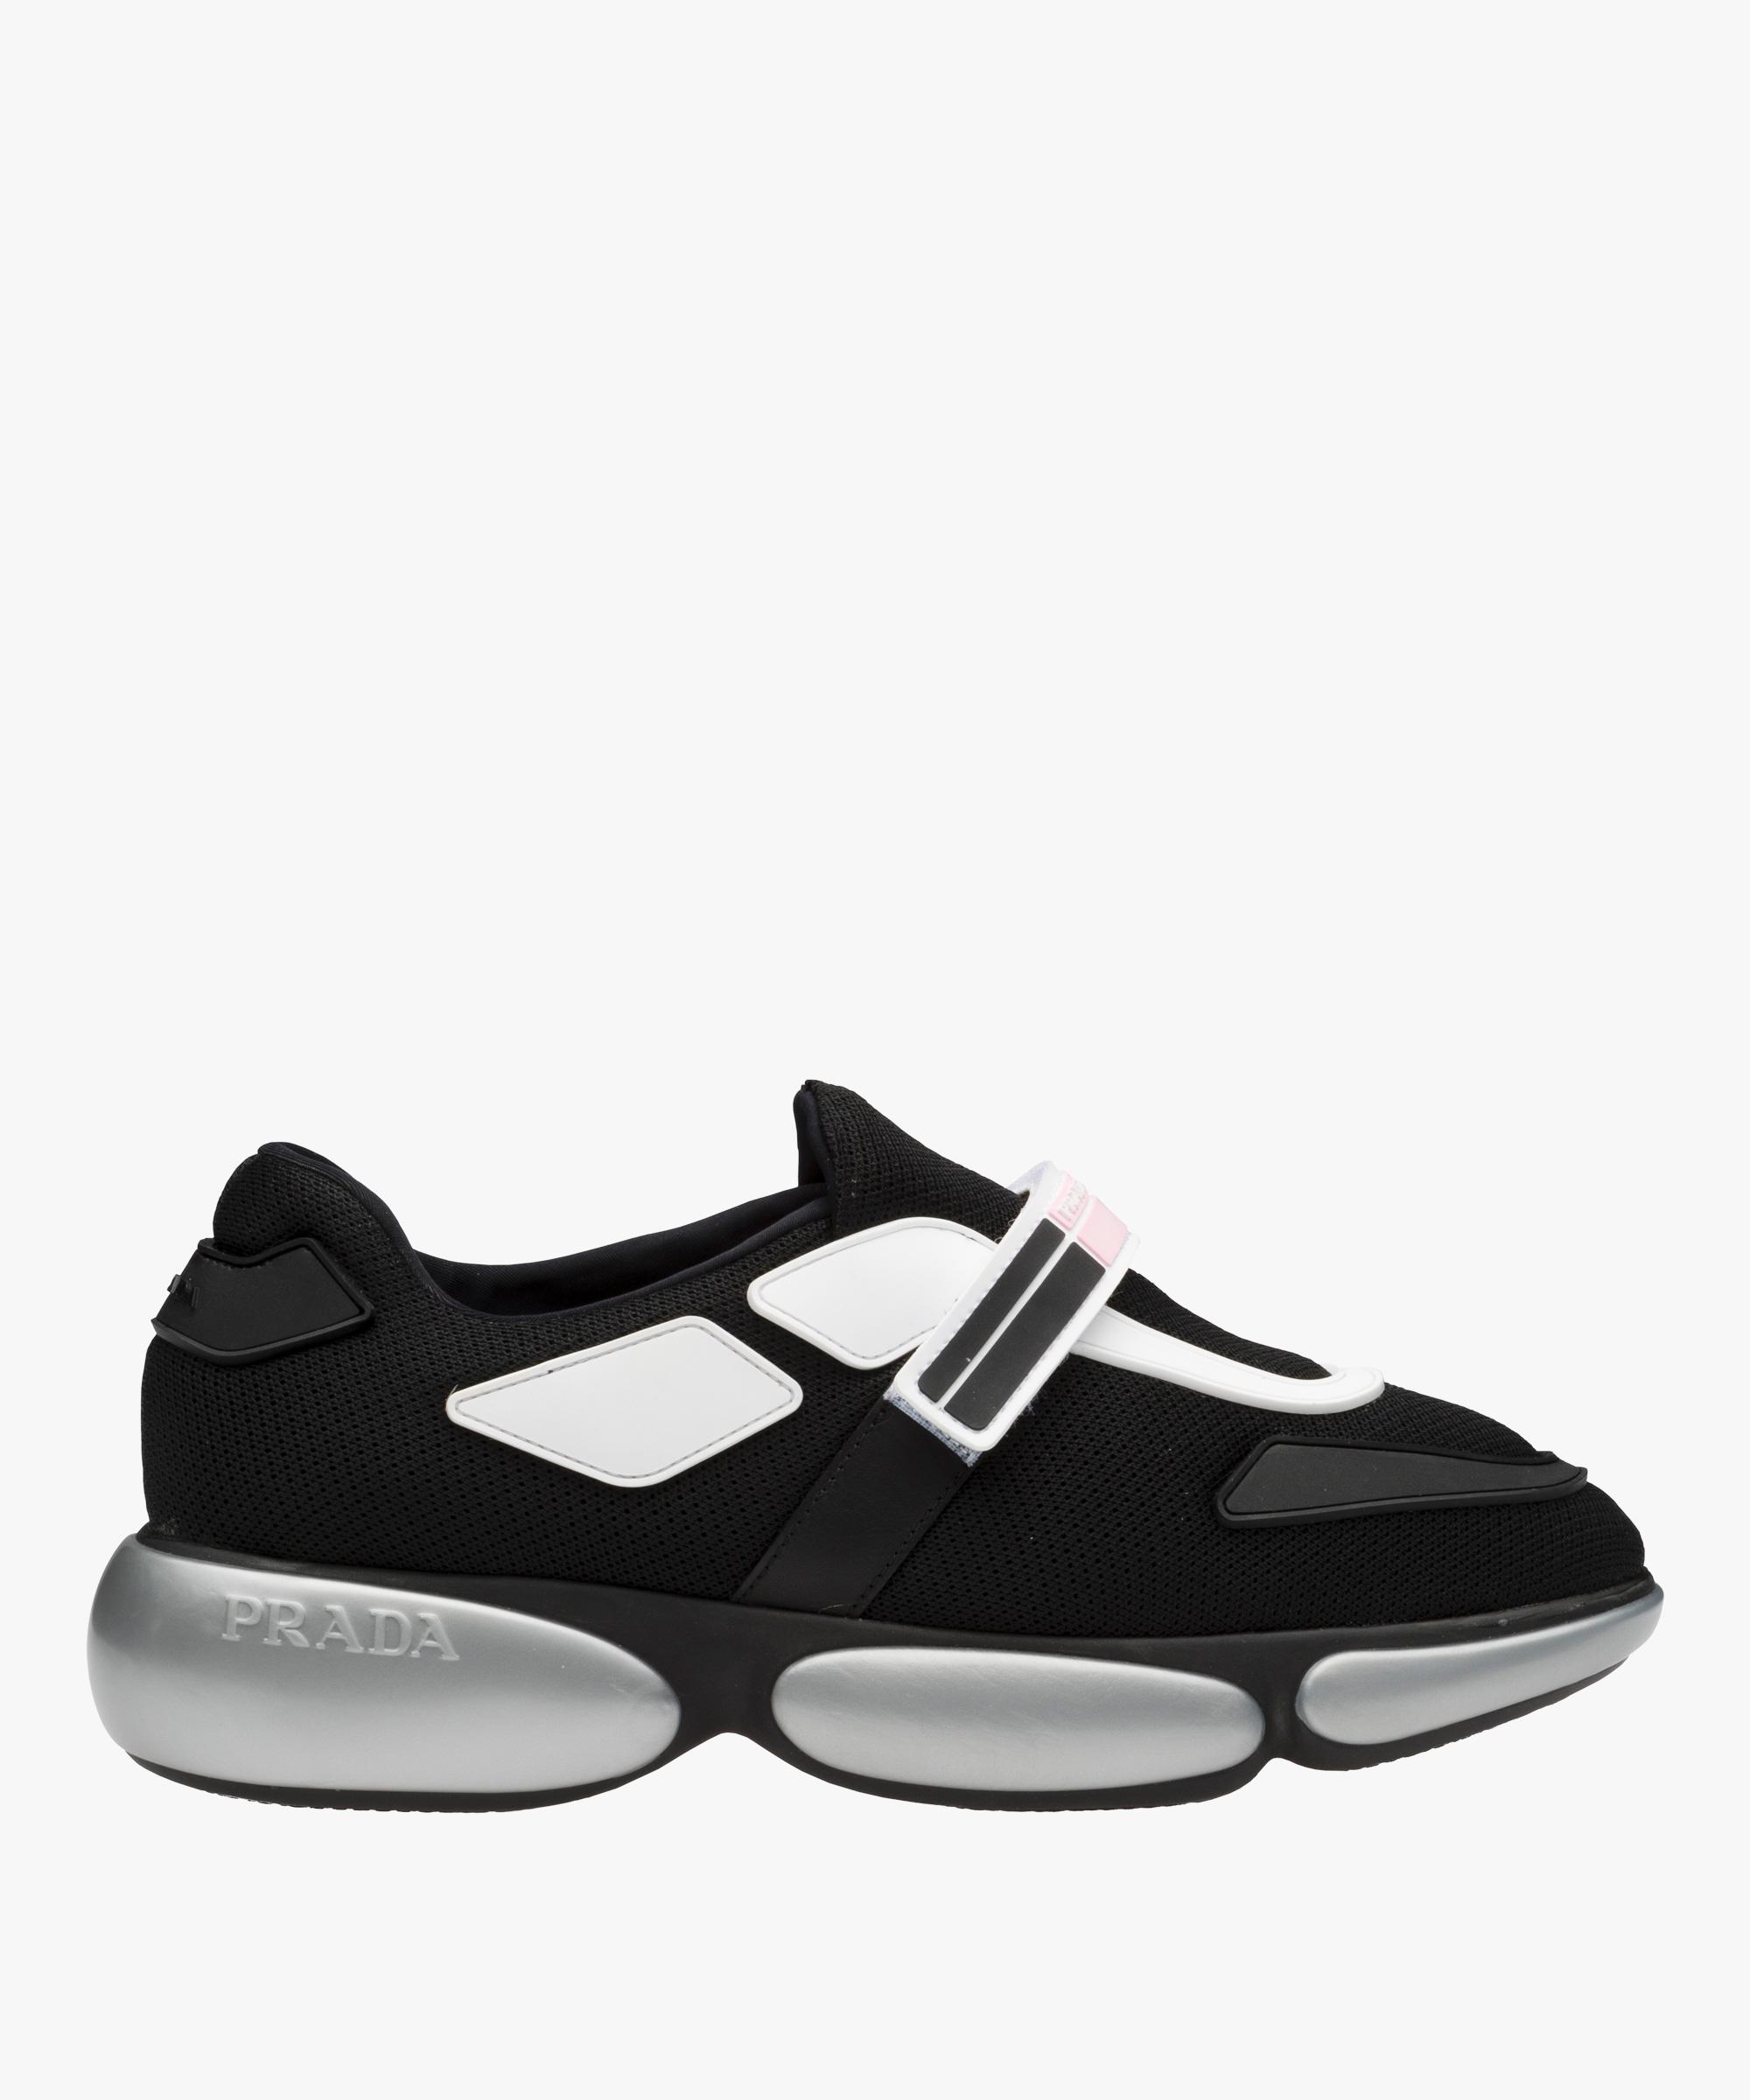 Prada Rubber Sneakers Cloudbust in Black+Silver (Black) for Men - Lyst